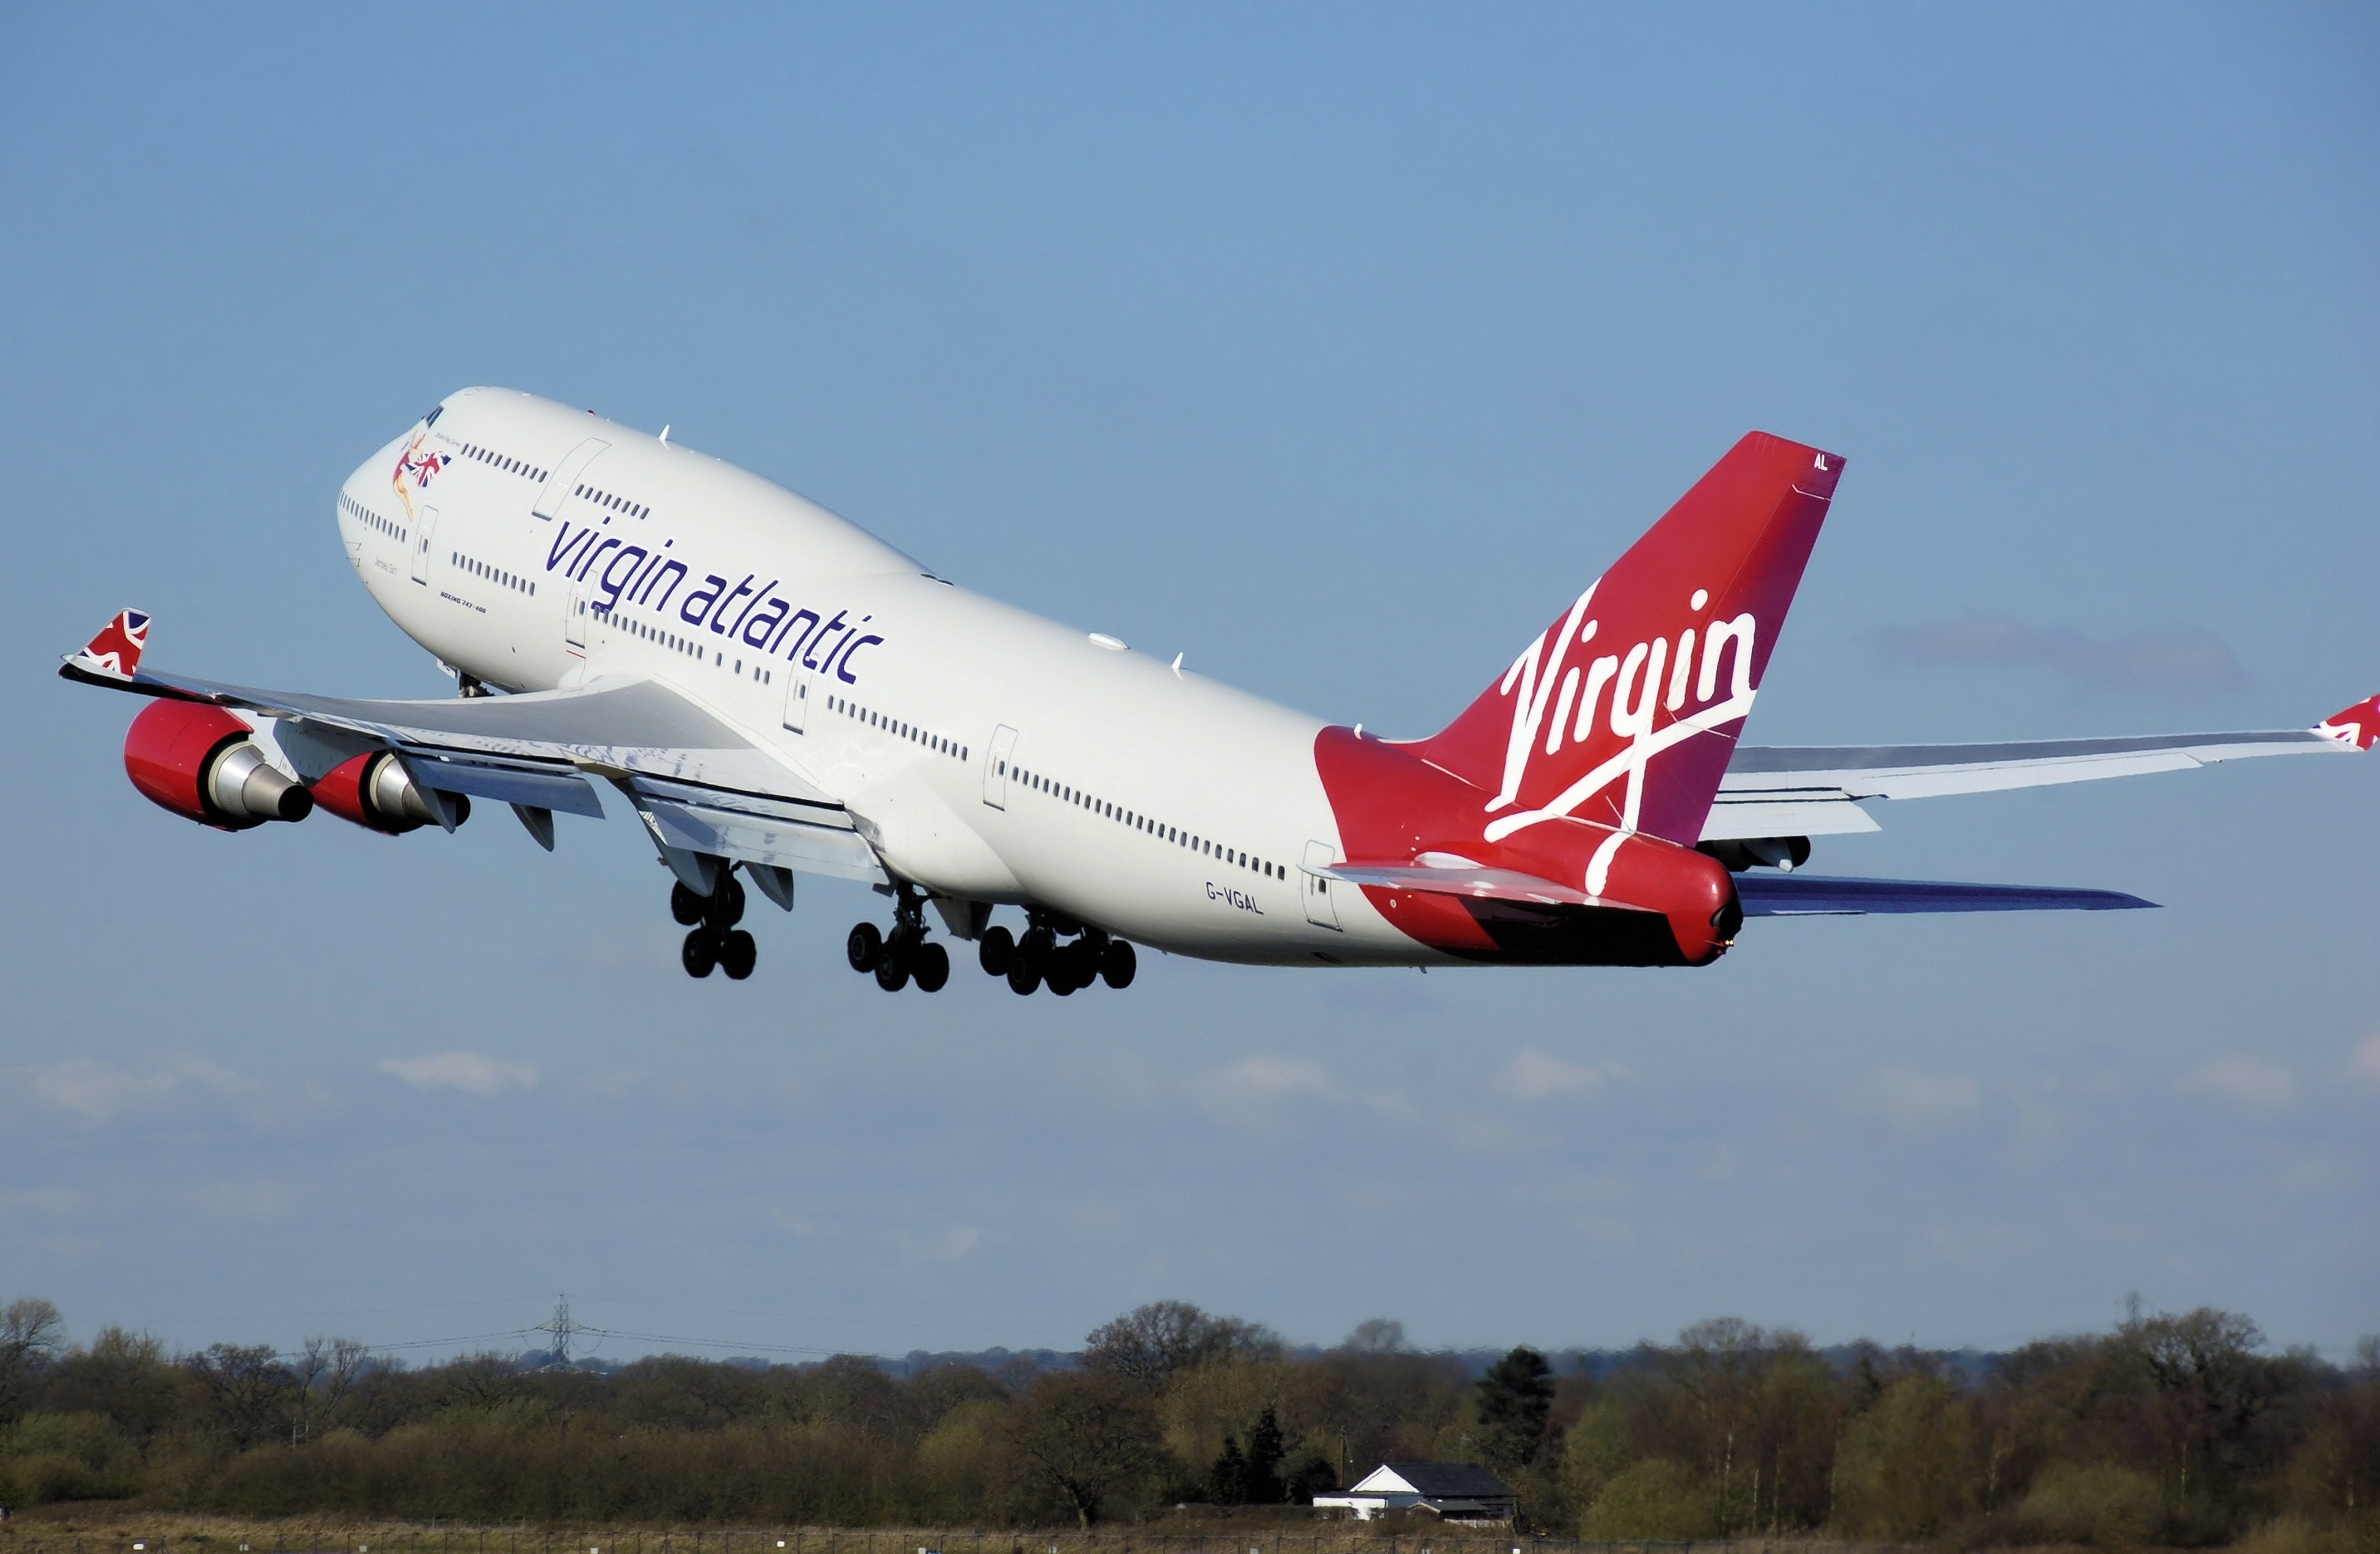 white and red virgin atlantic passenger airplane